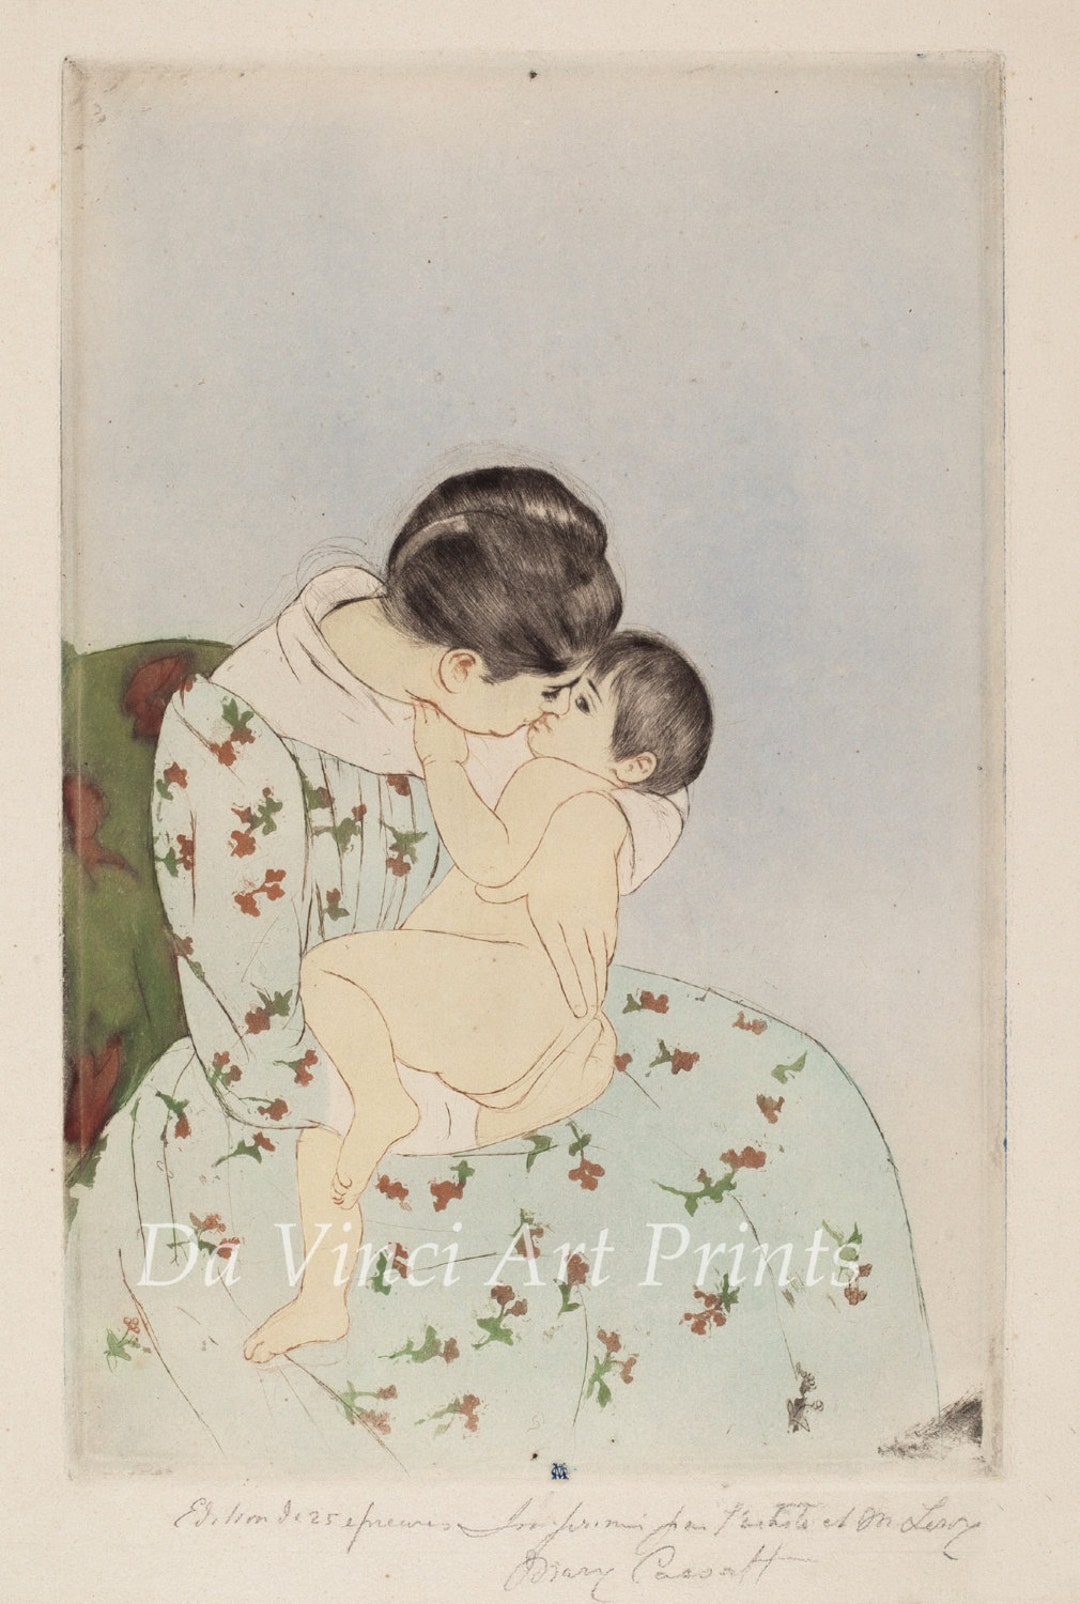 Mary Cassatt Reproductions Mother's Kiss 1890. - Etsy